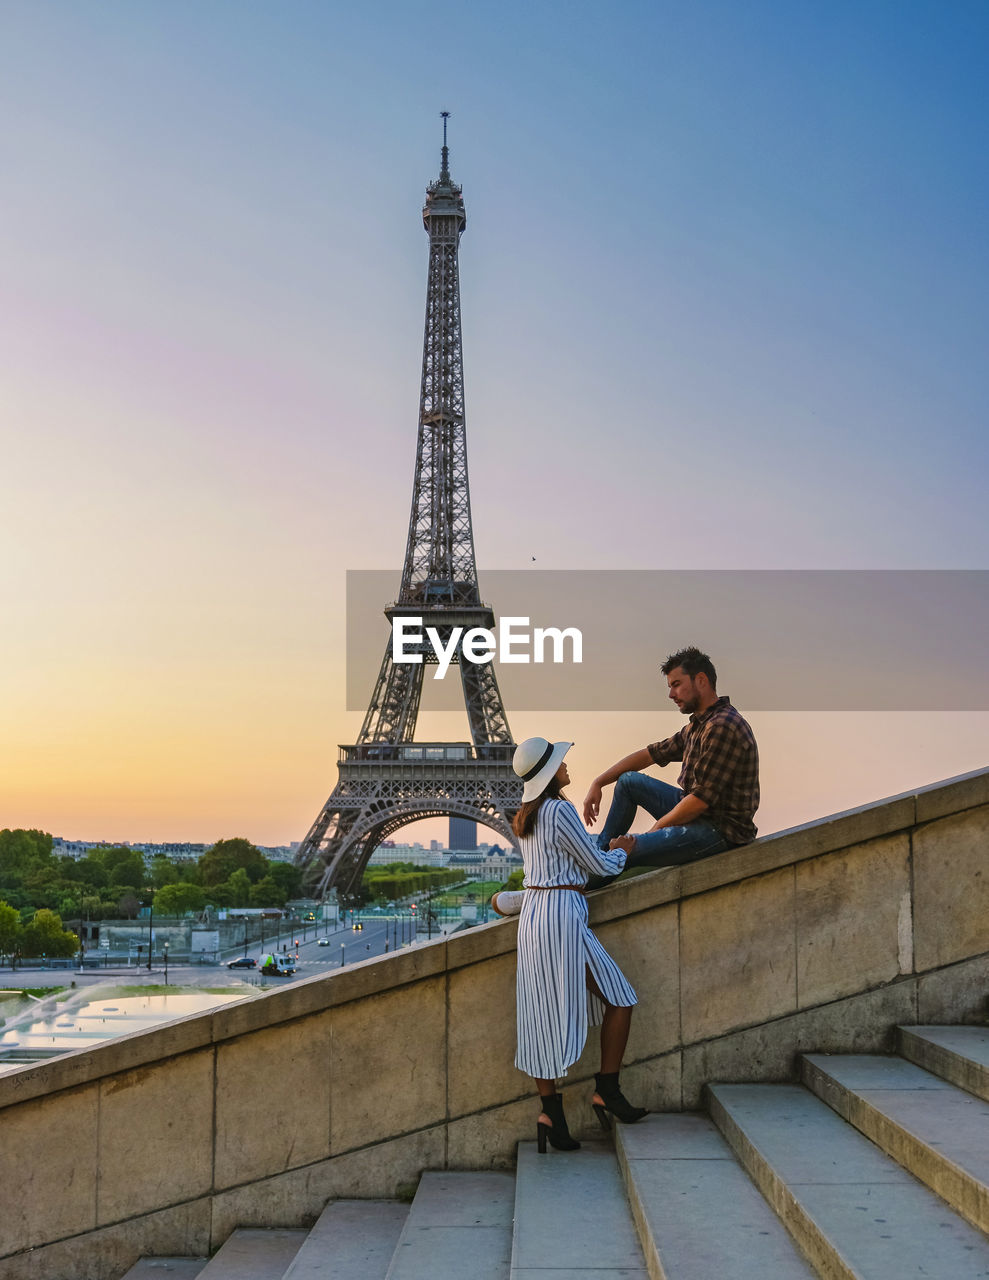 Eiffel tower at sunrise in paris france, paris eifel tower on a summer day